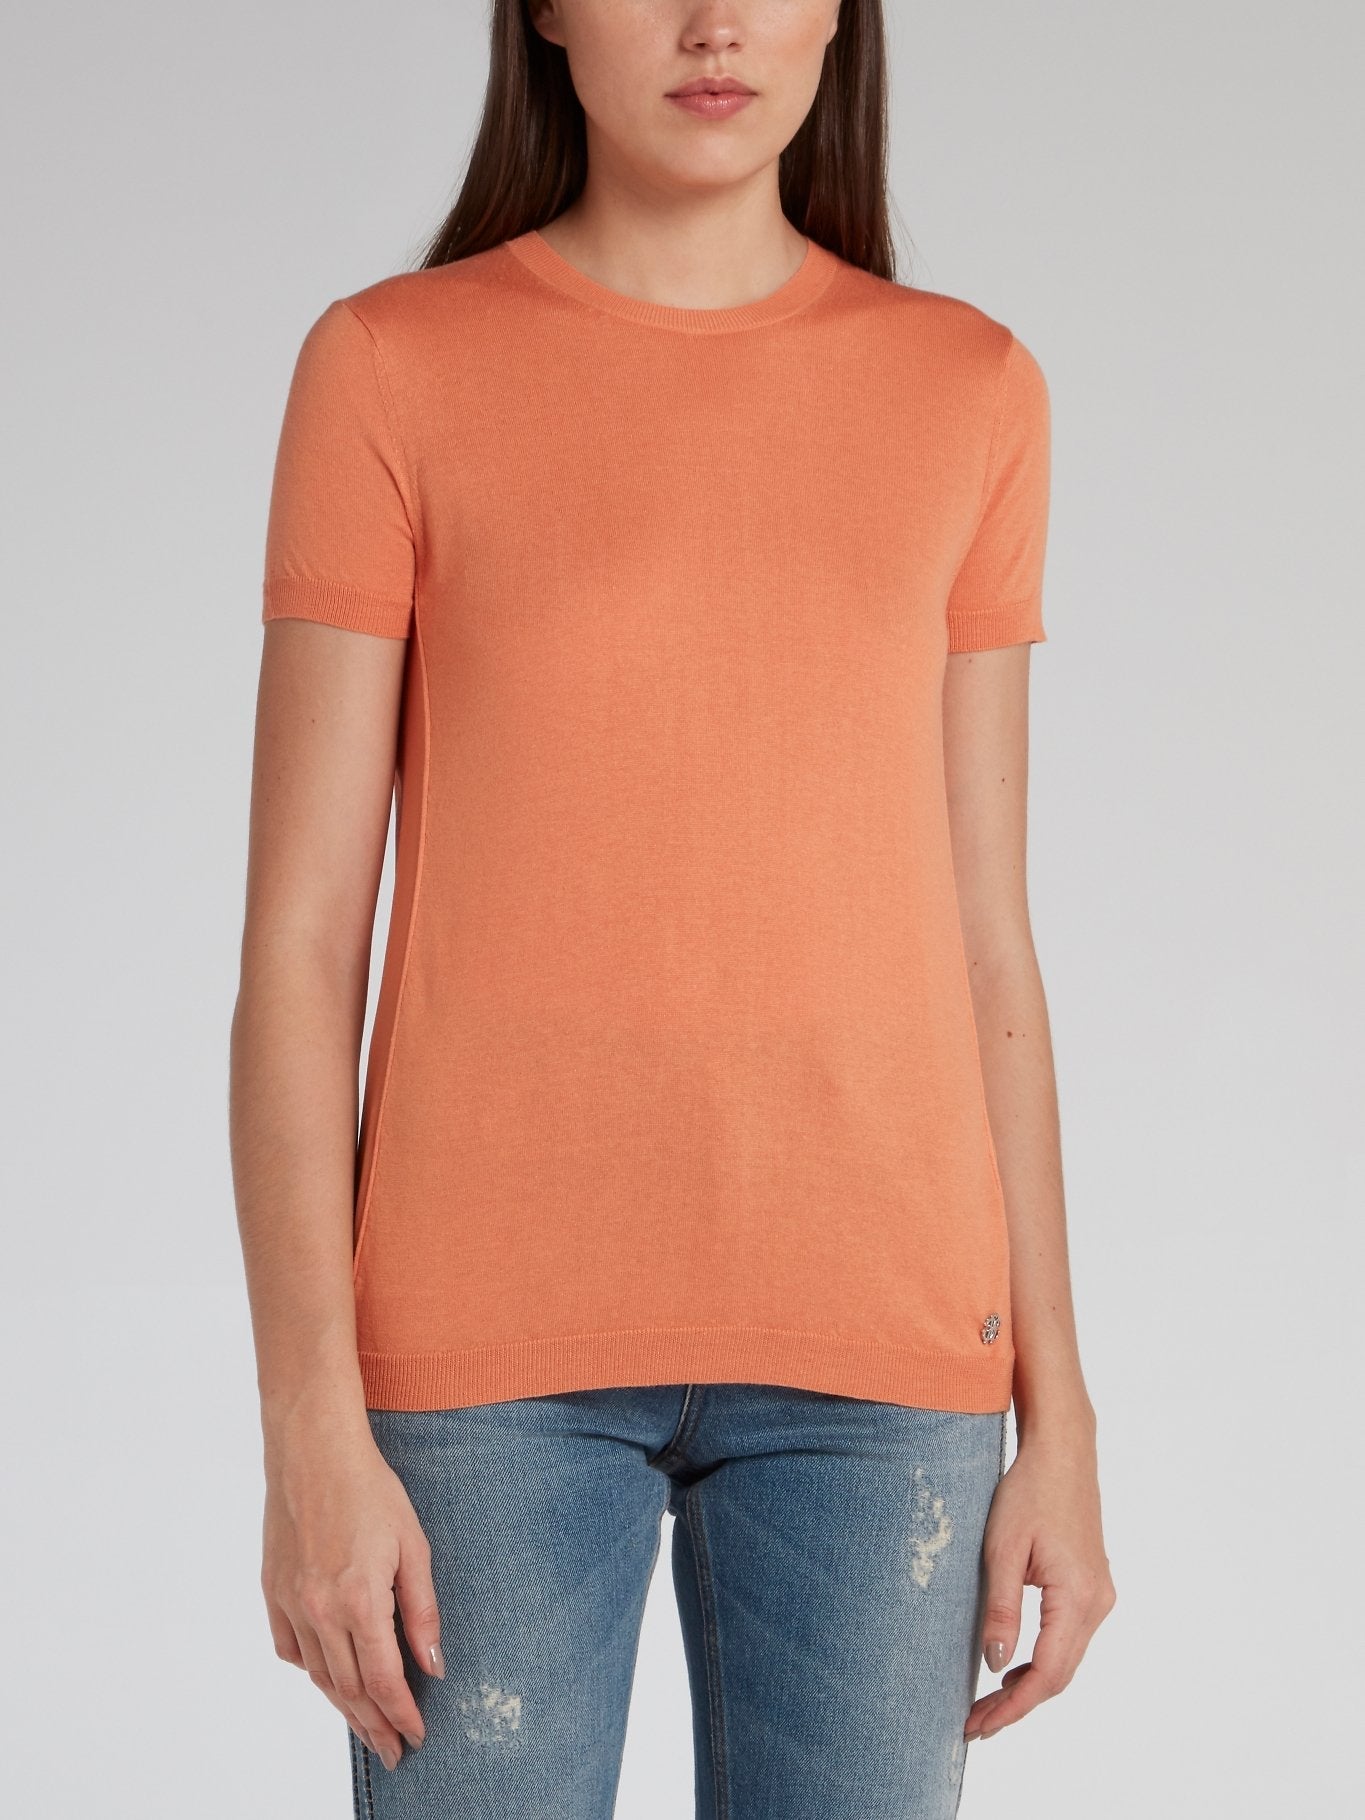 Coral Orange Knit T-Shirt